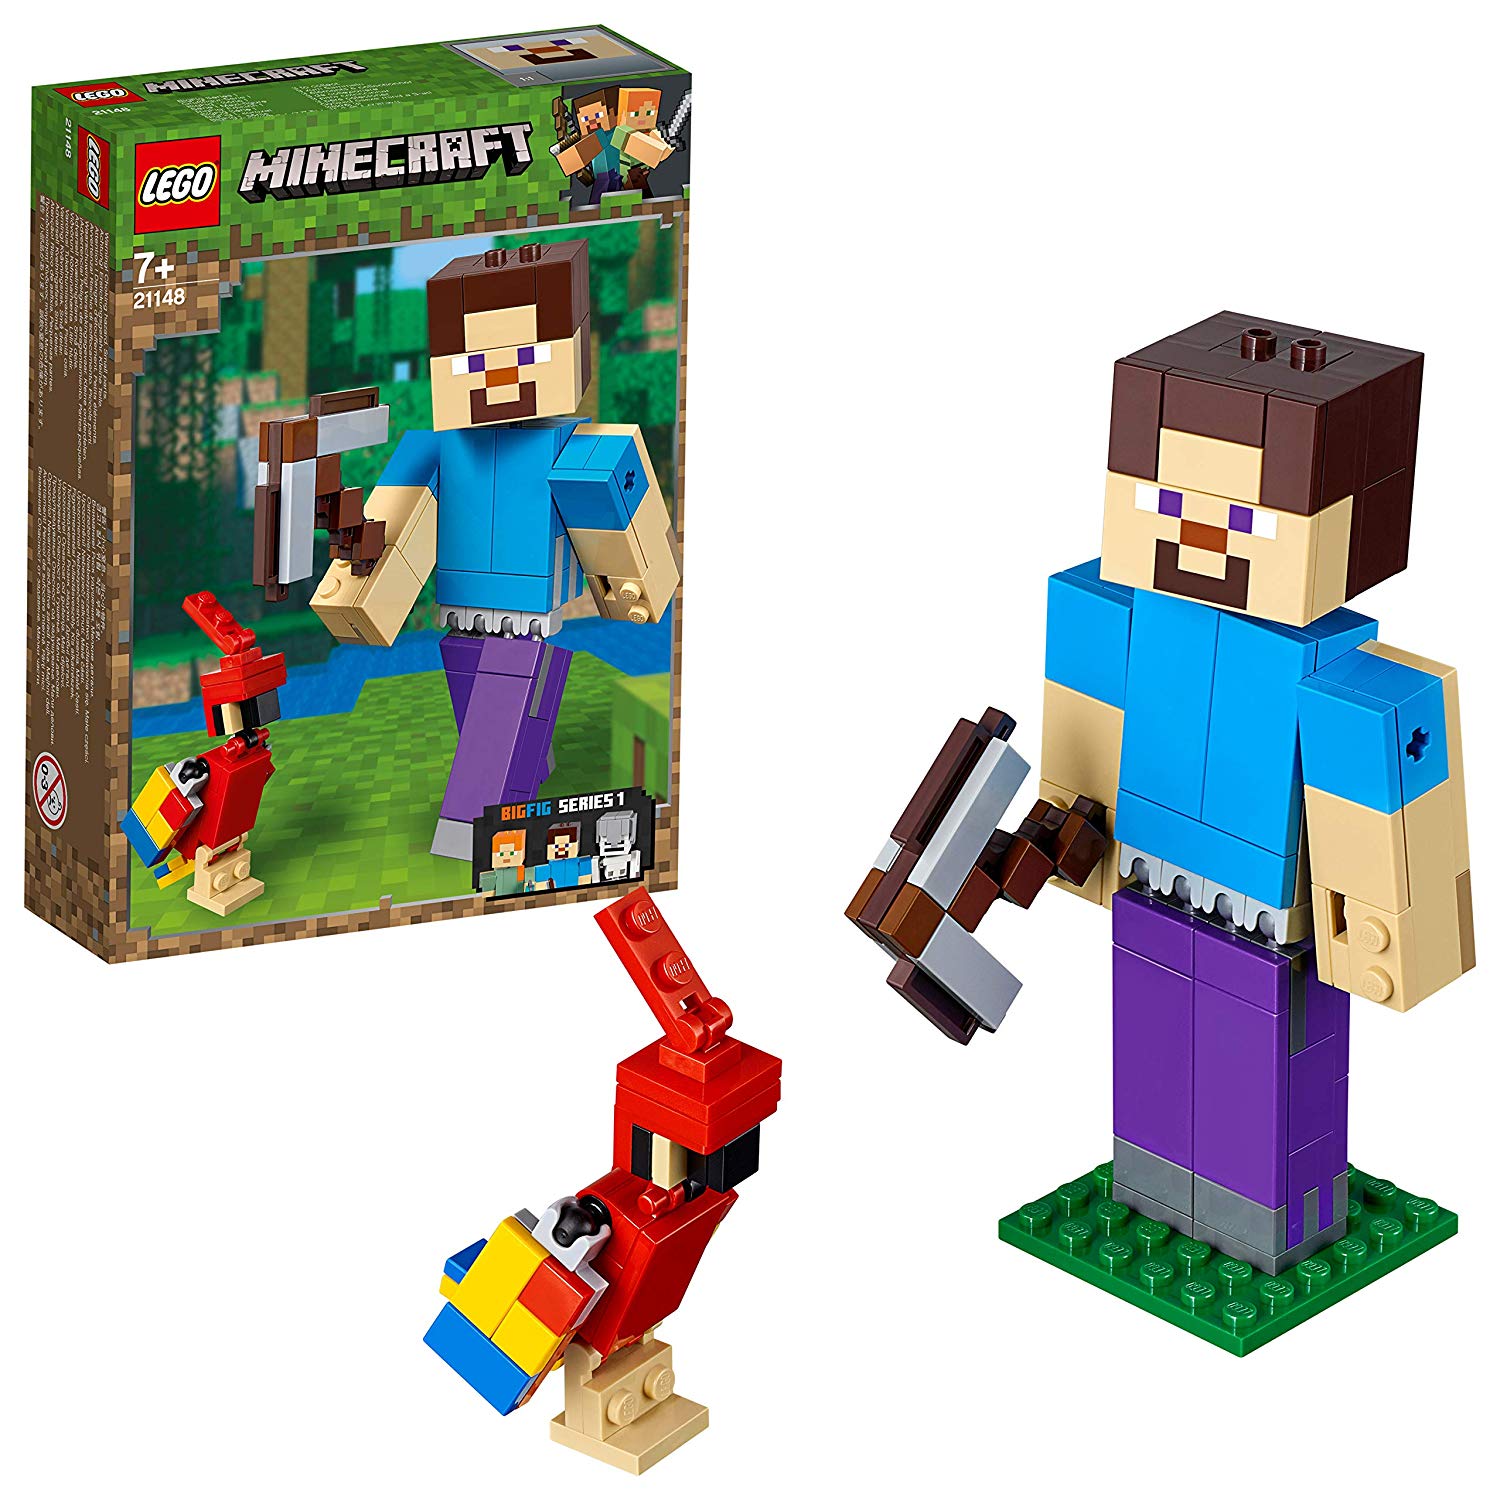 Lego Minecrafttm 21148 Minecrafttm Bigfig Steve With Parrot